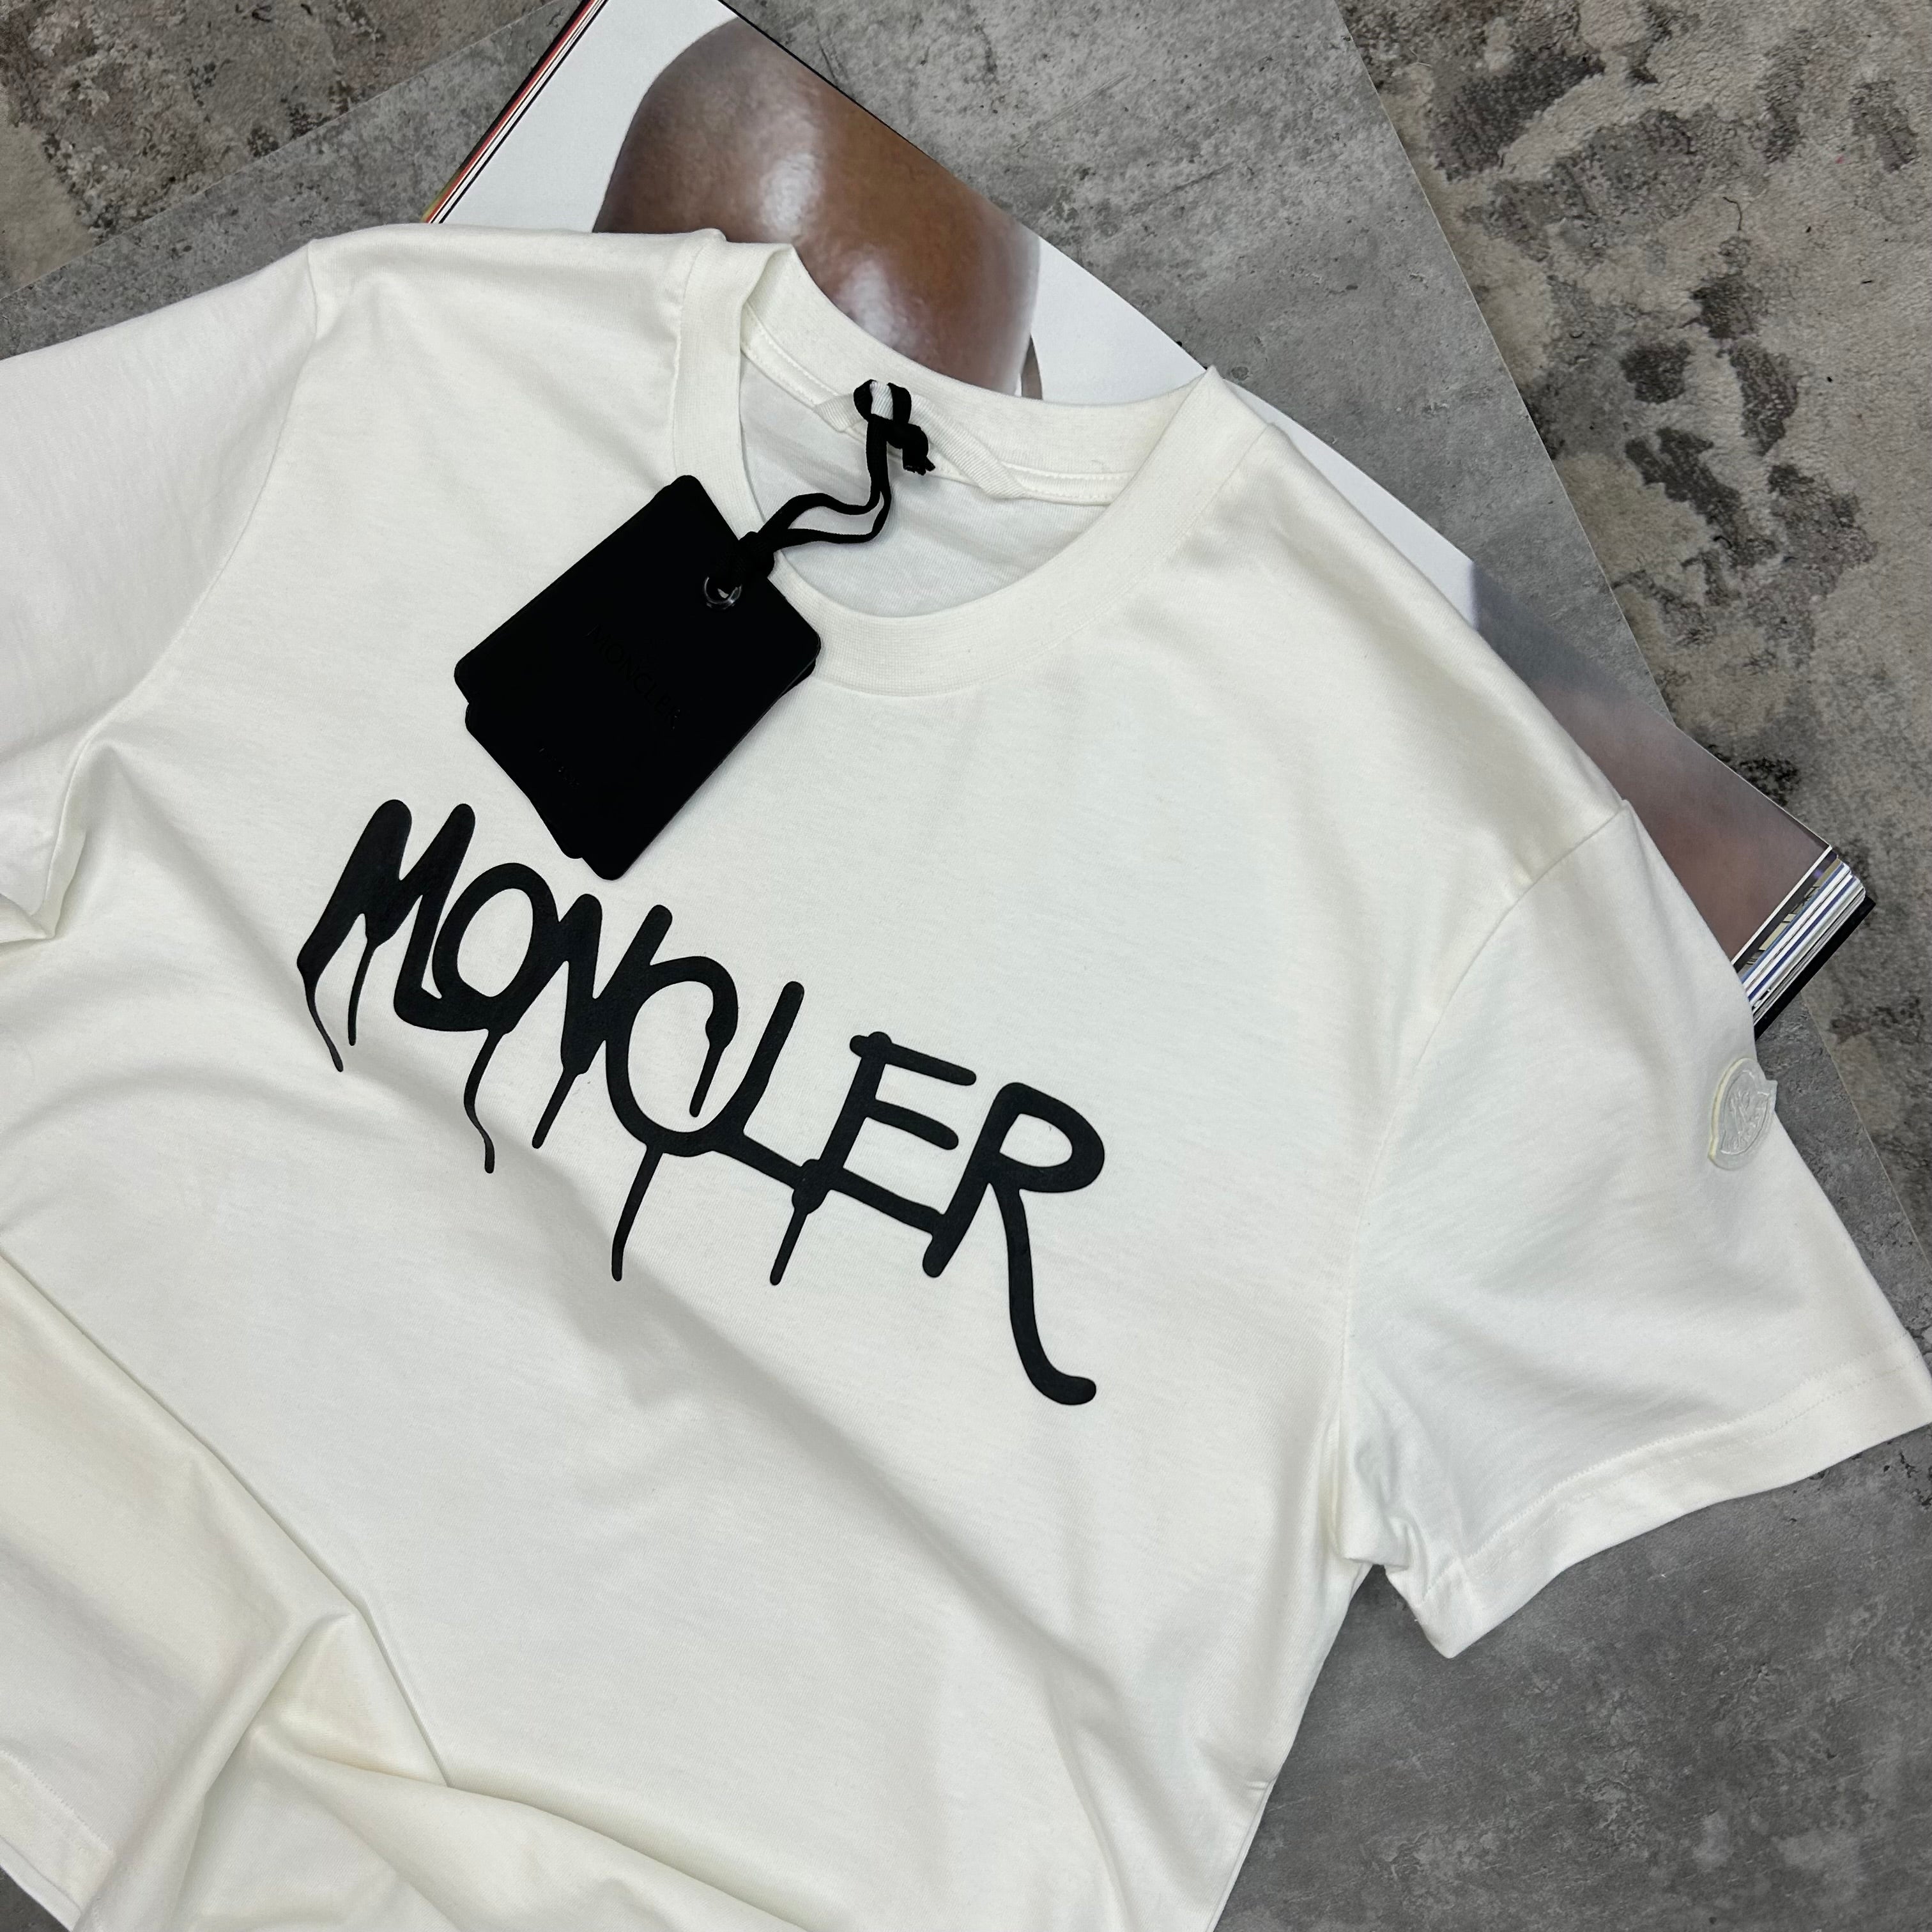 MONCLER - GRAFFITI T-SHIRT - WHITE